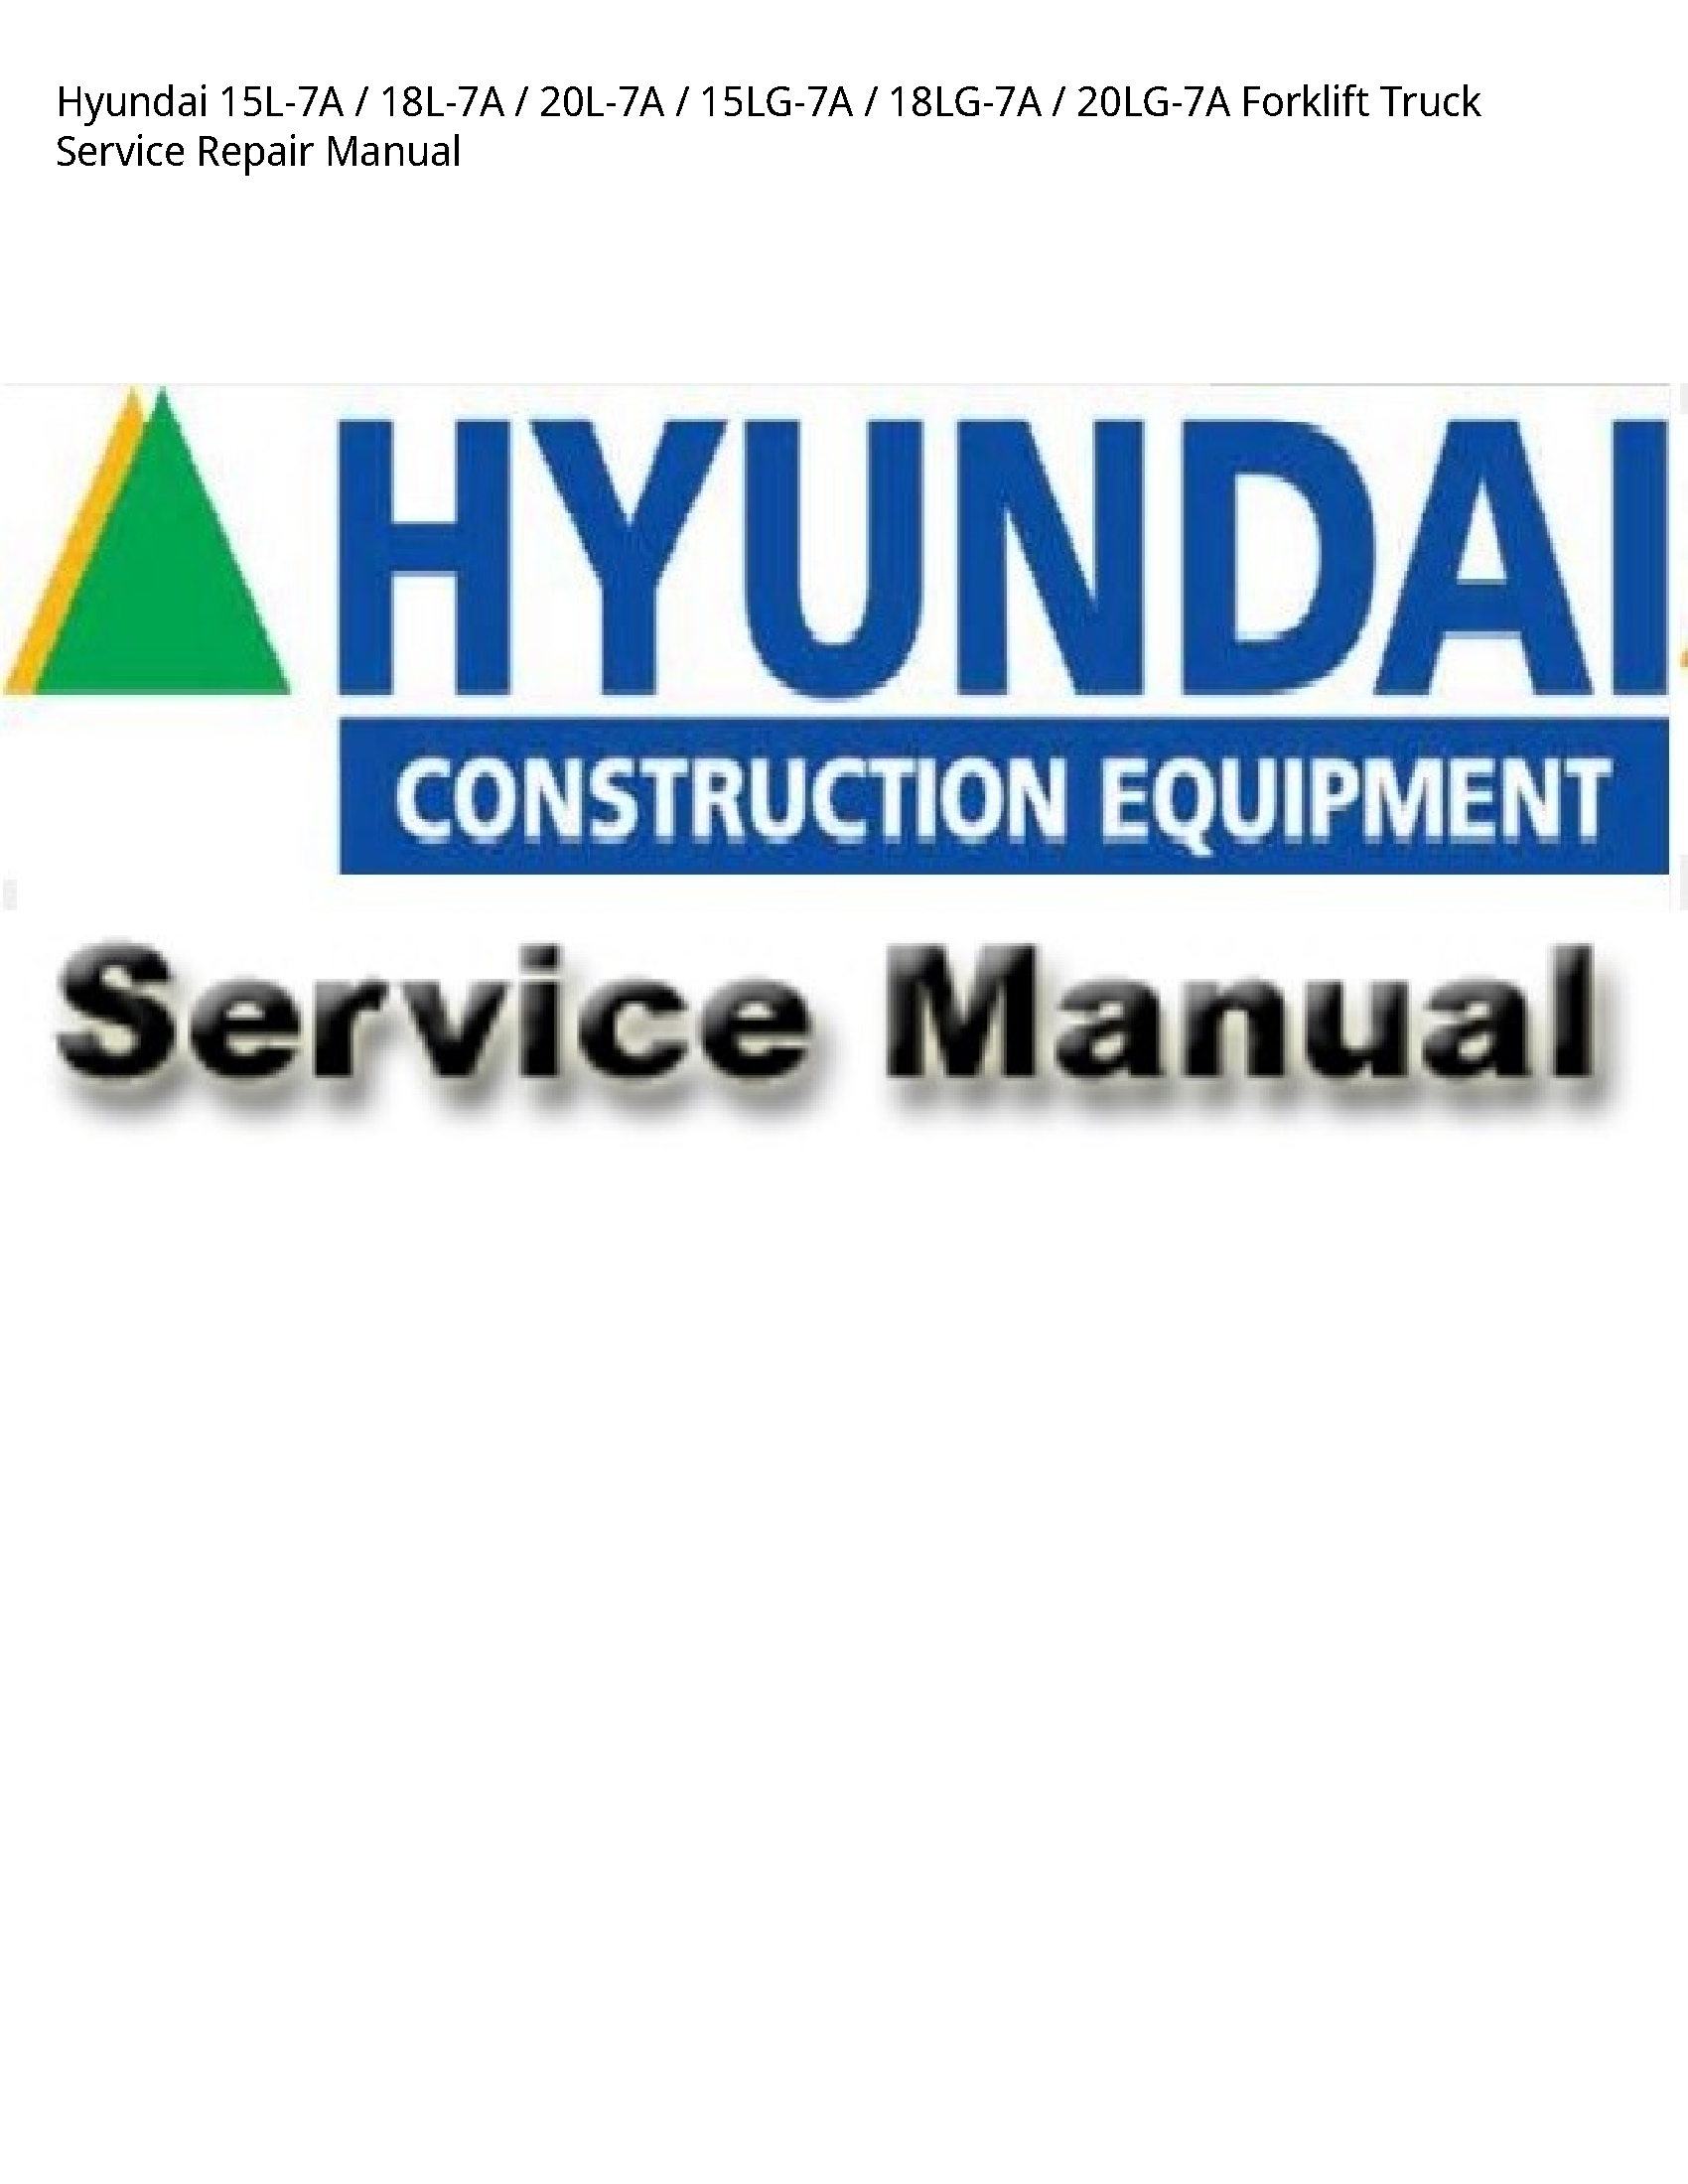 Hyundai 15L-7A Forklift Truck manual